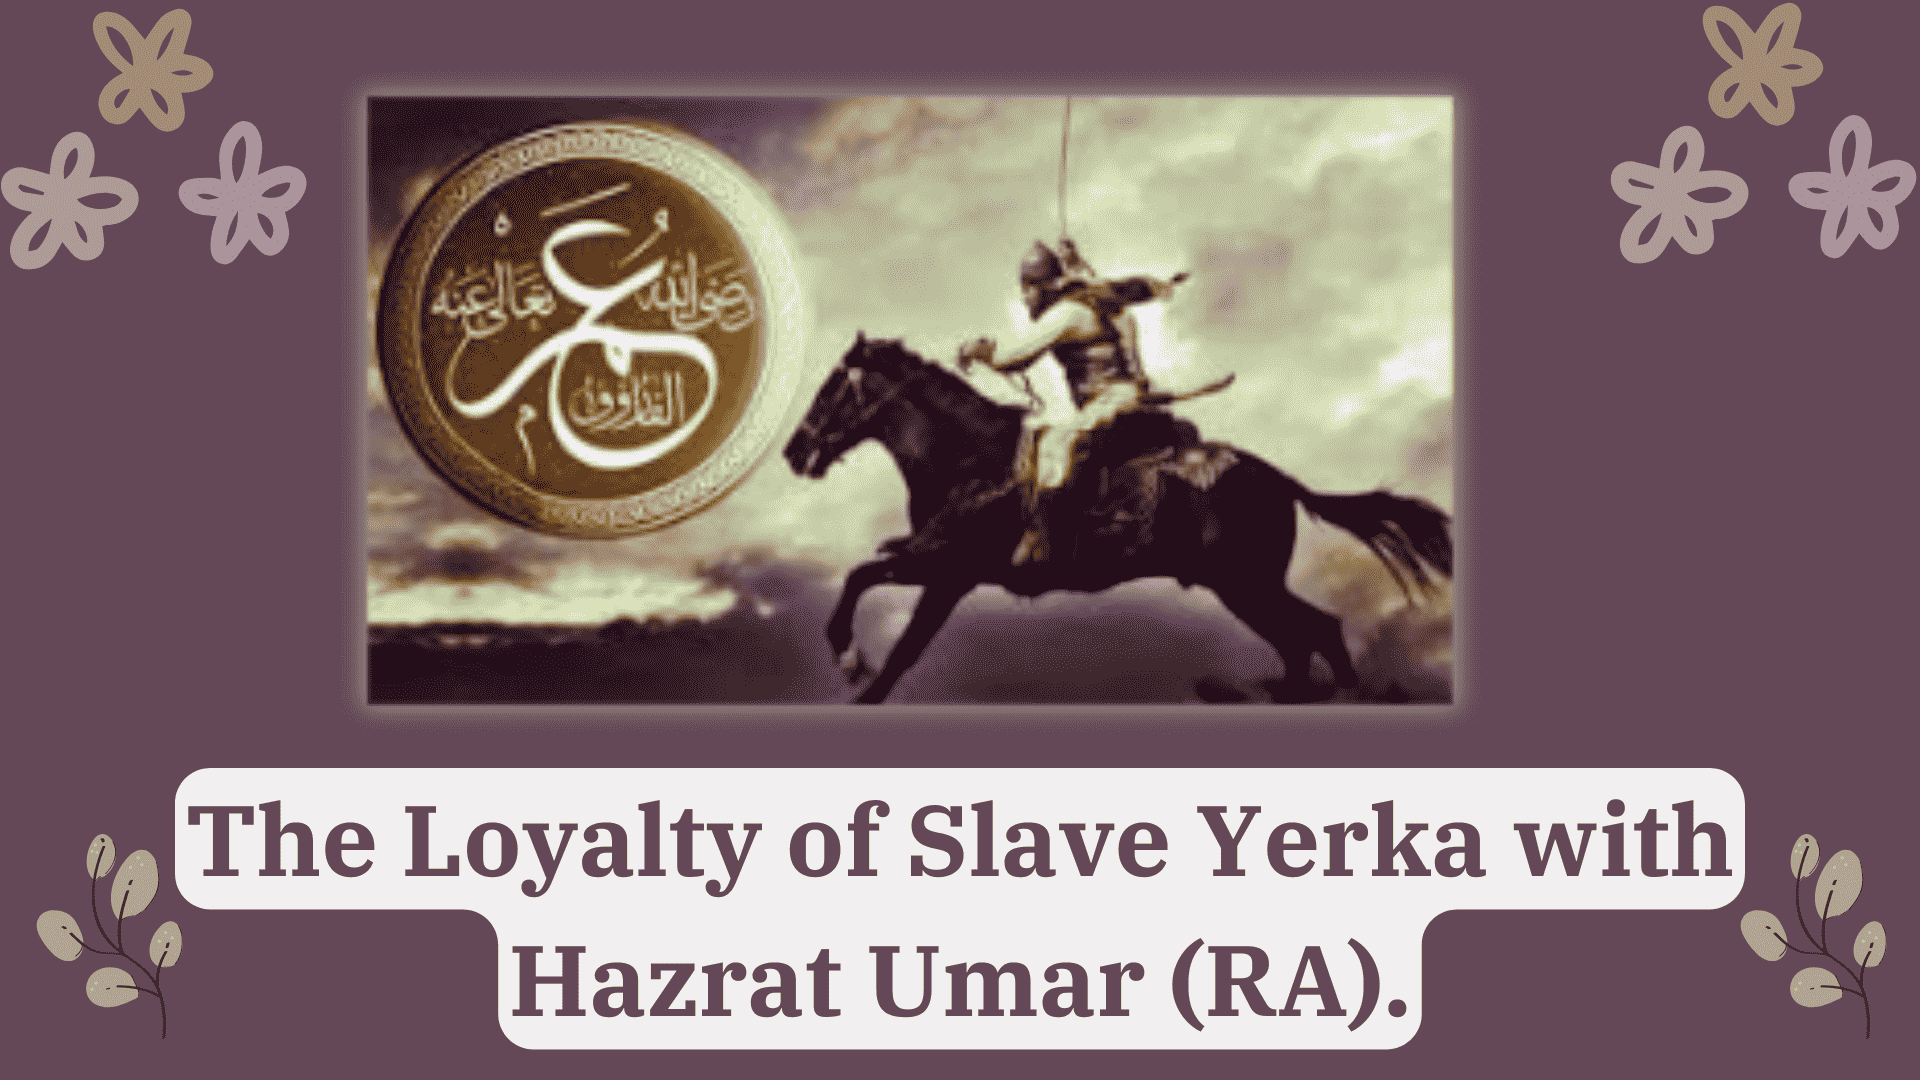 The Loyalty of Slave Yerka with Hazrat Umar (RA).